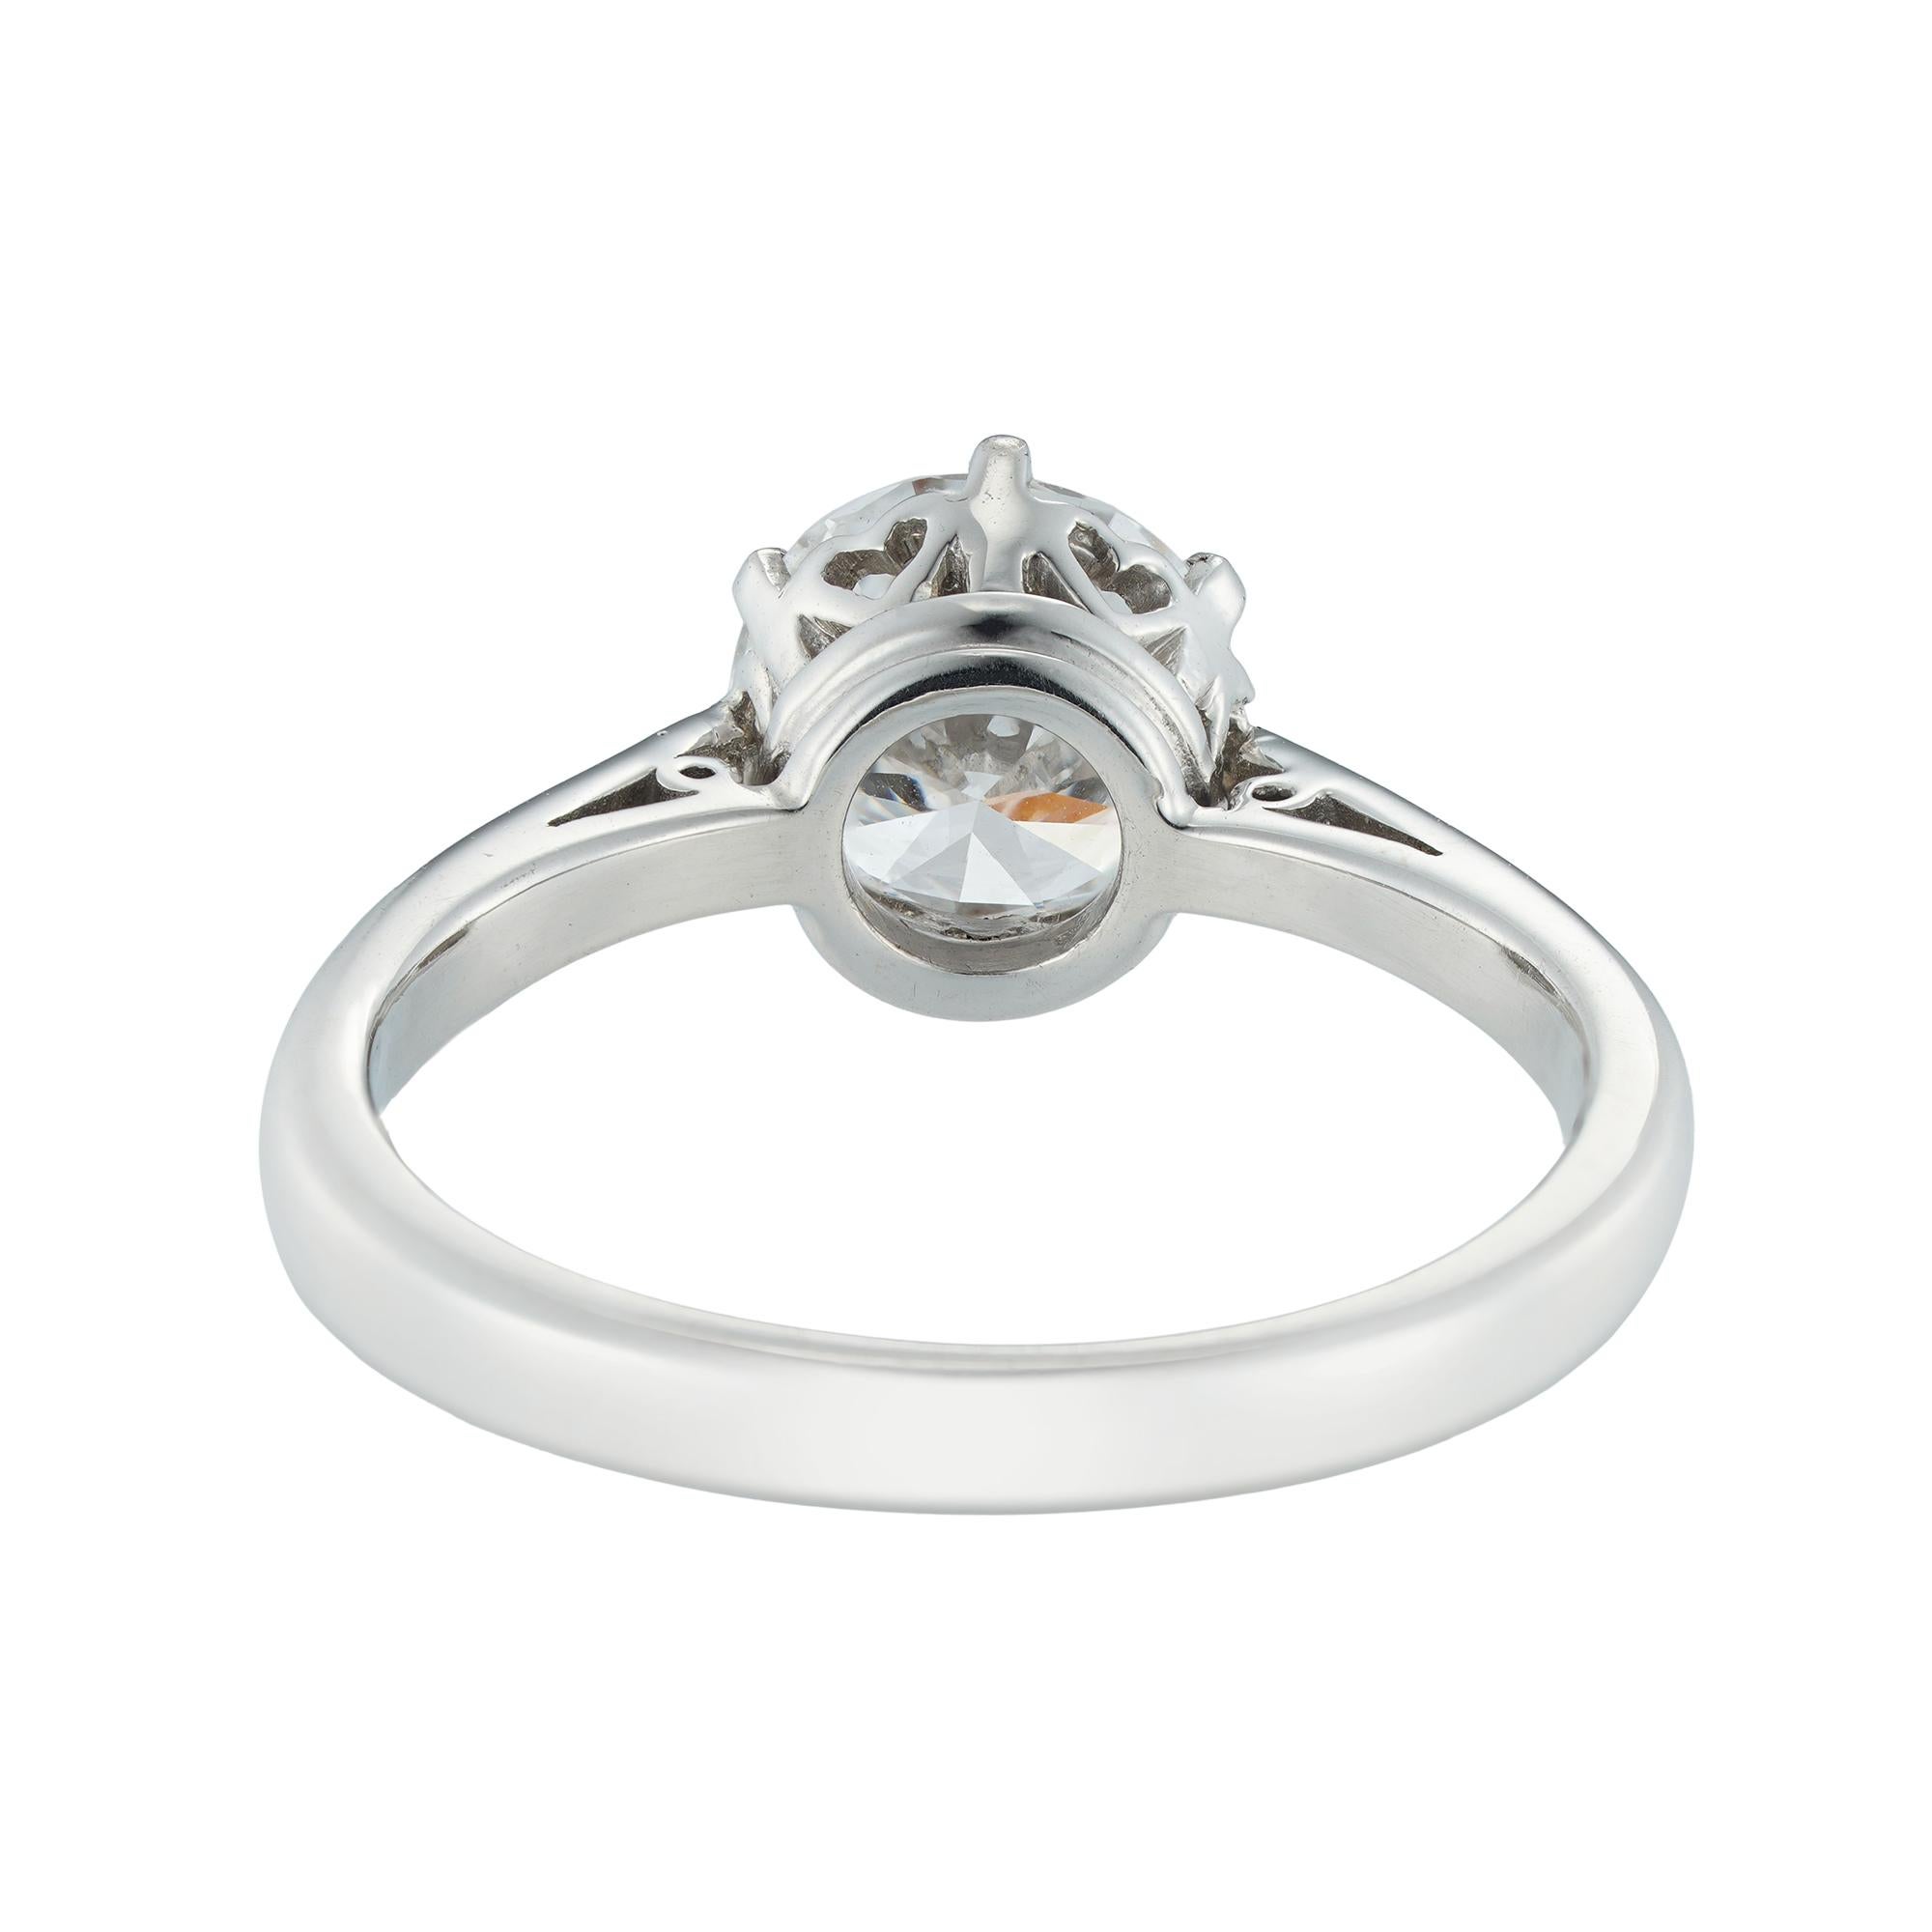 1.51 carat diamond ring